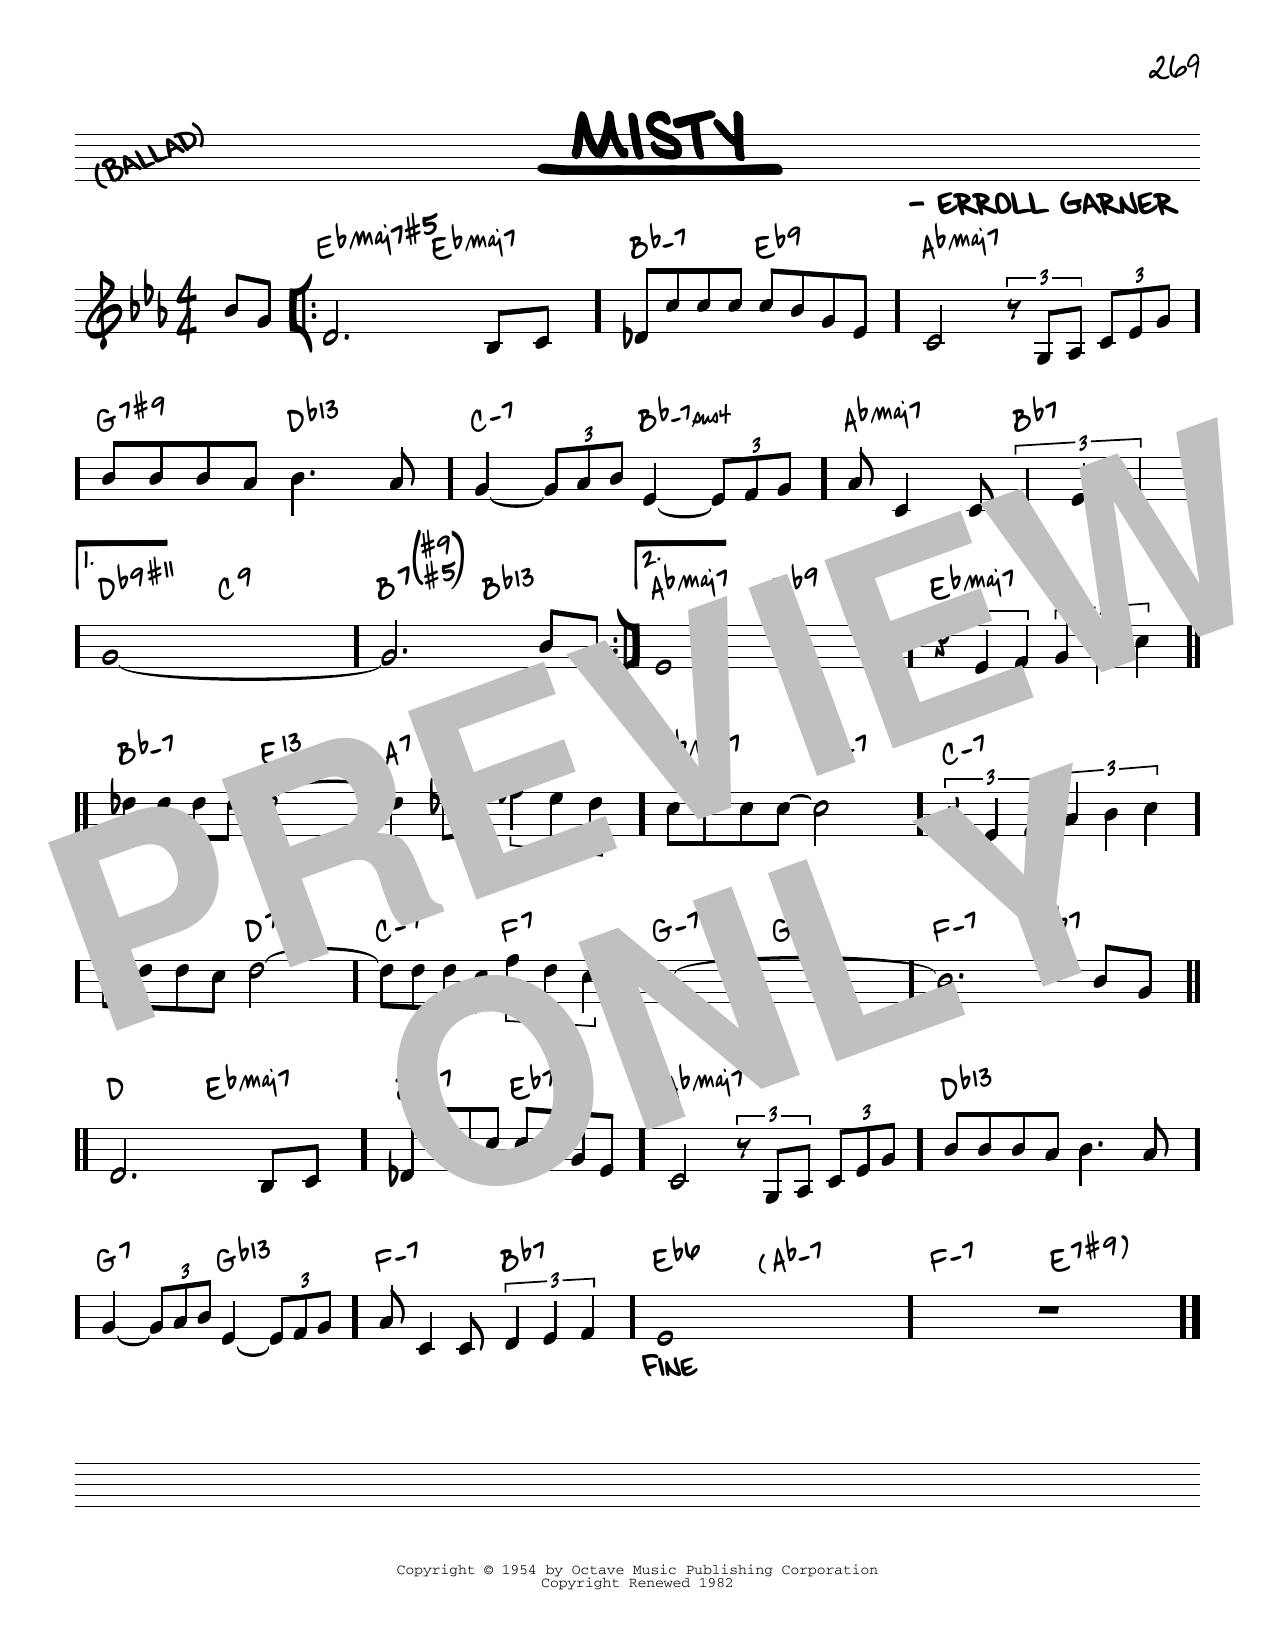 Download Erroll Garner Misty [Reharmonized version] (arr. Jack Sheet Music